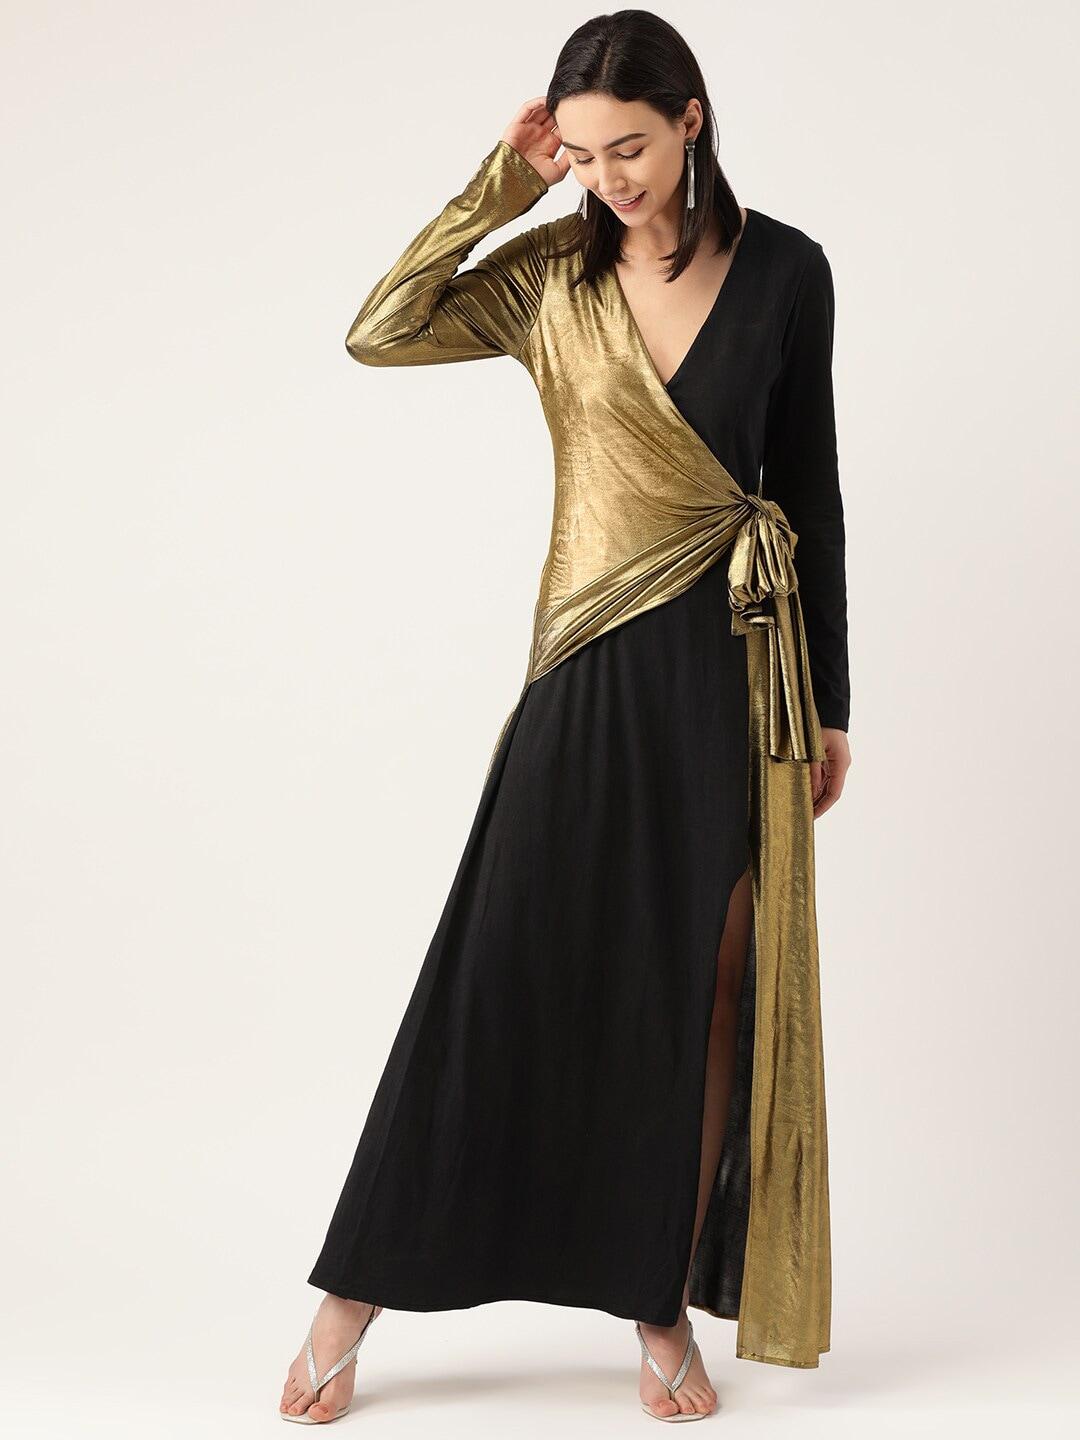 dodo & moa women gold & black solid wrap dress